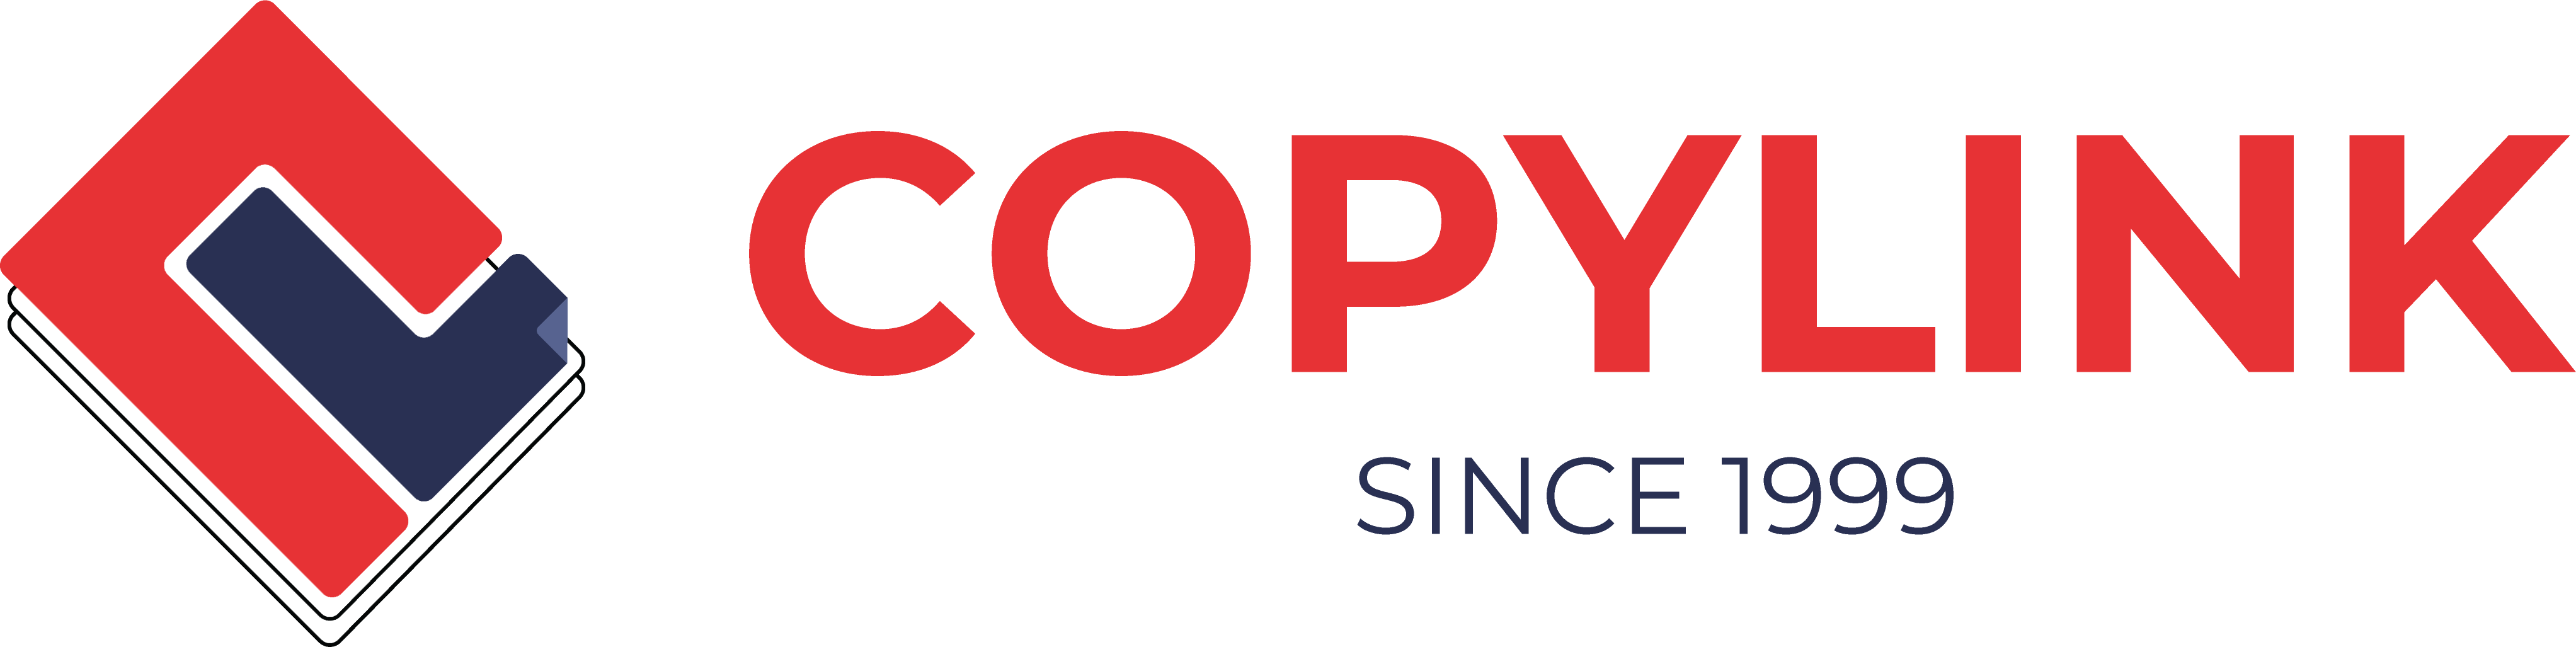 Copylink Enterprises Logo - Printing and Bookbinding in Quezon City